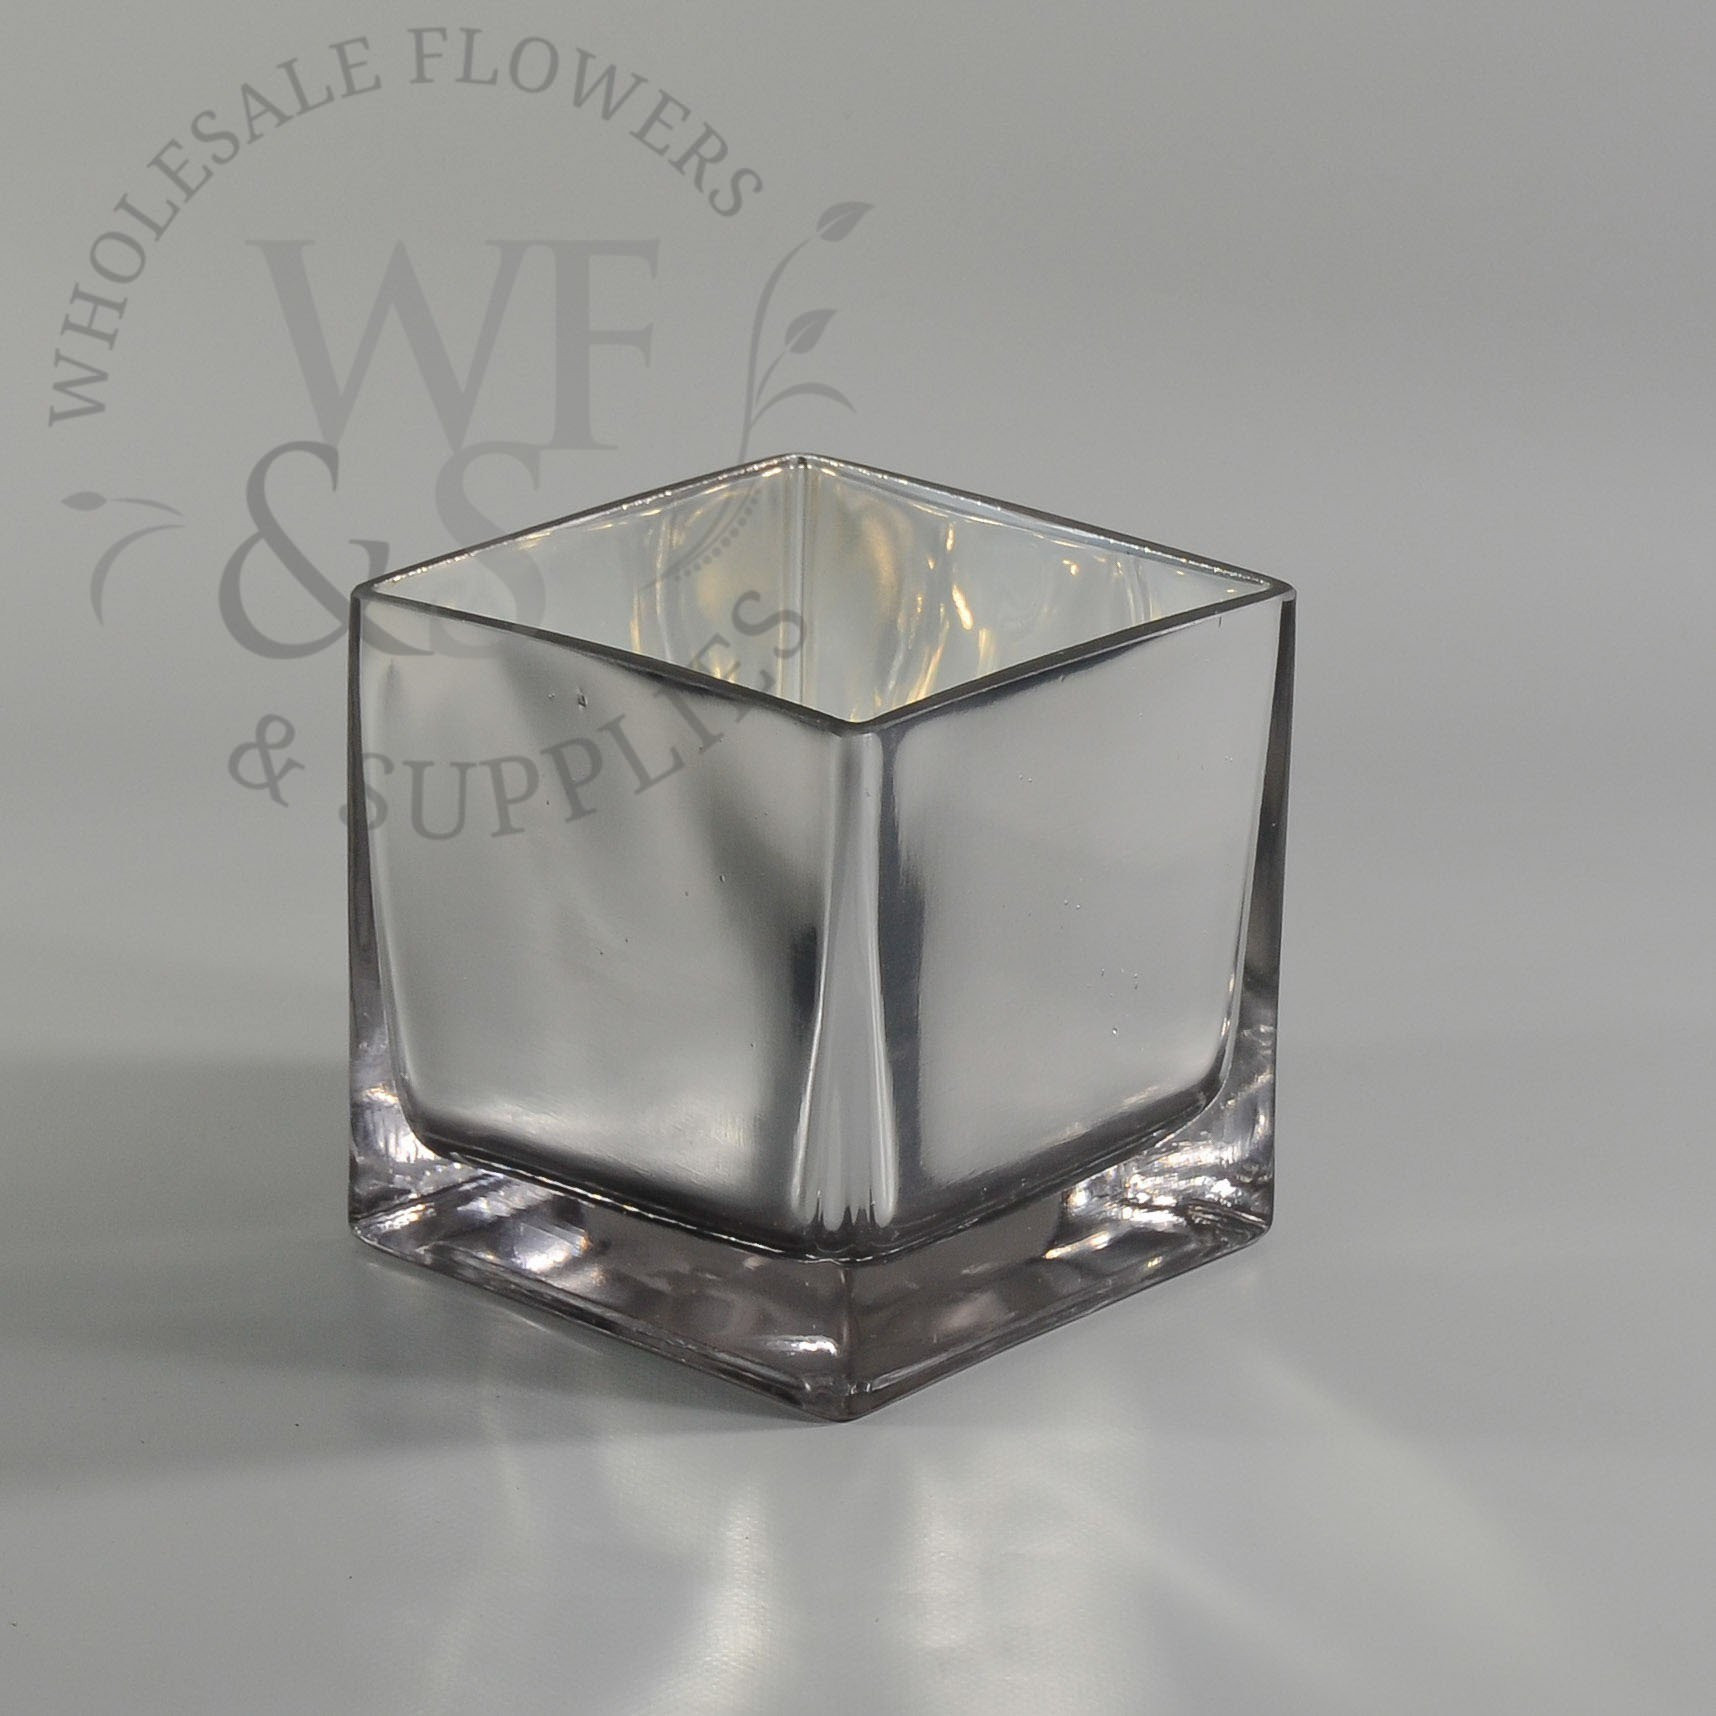 Antique Japanese Vases Of 13 Fresh Silver Mirror Vase Bogekompresorturkiye Com with Regard to Crystal Mirror Inspirational Mirror Vase 8 1h Vases Mirrored Square Cube Riser Inch Squarei 0d Uk